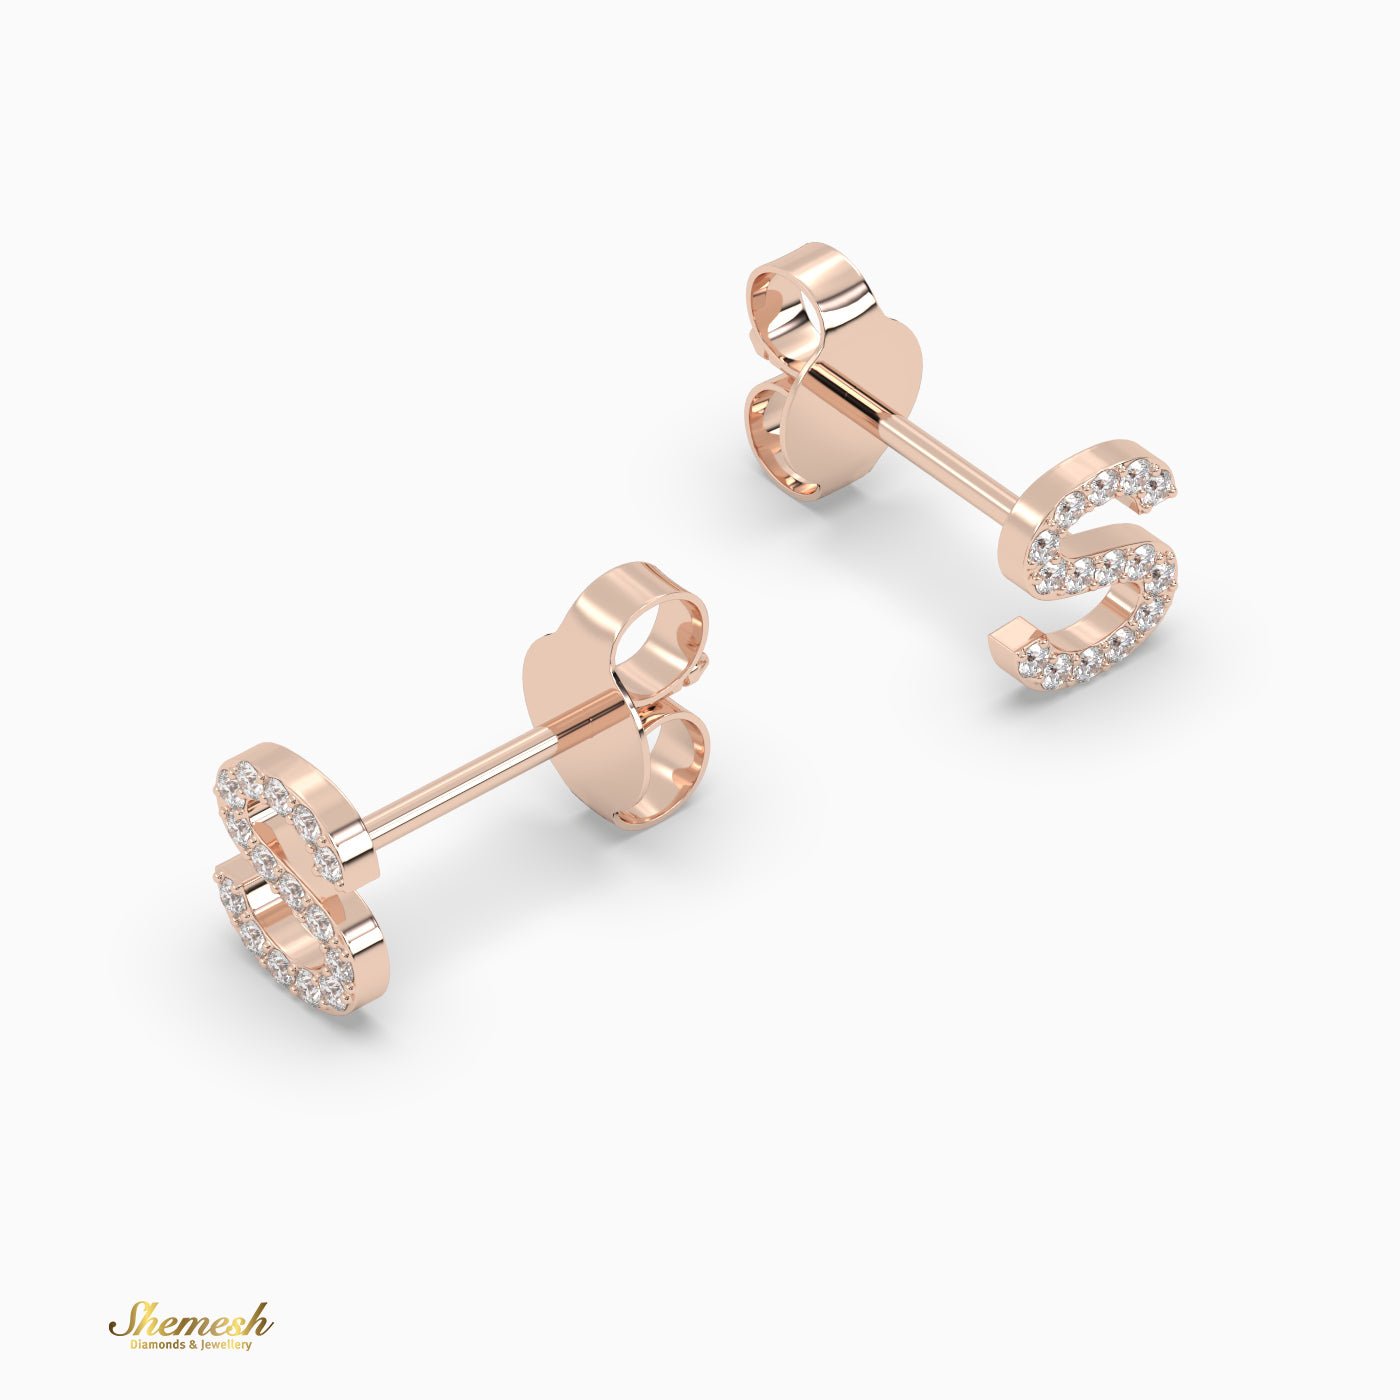 18K Gold "S" Initial Stud Earrings - shemesh_diamonds